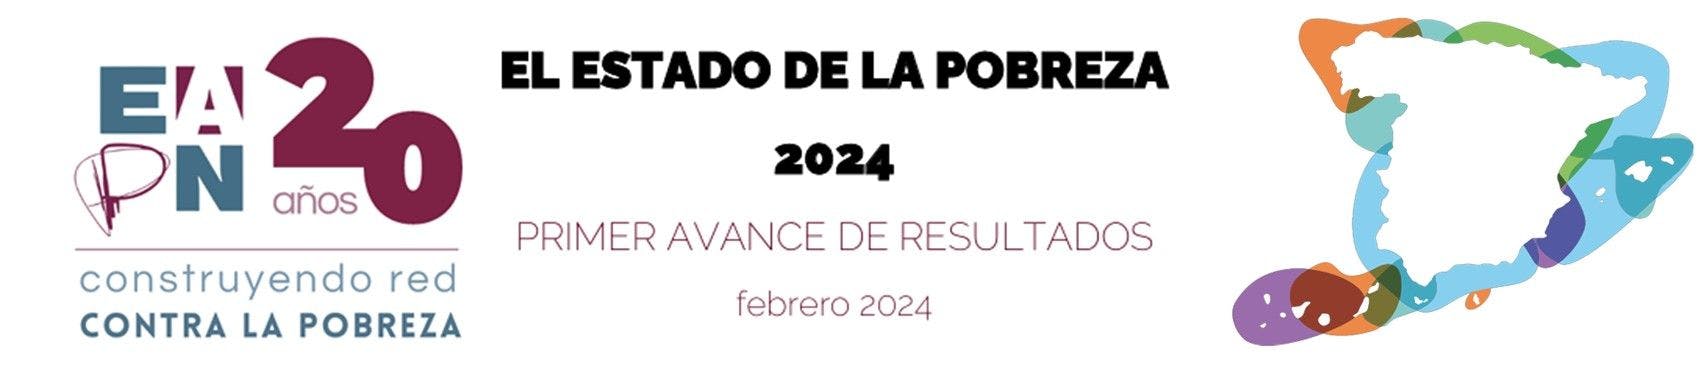 Informe preliminar Estado de la pobreza en España 2024 - Informe EAPN